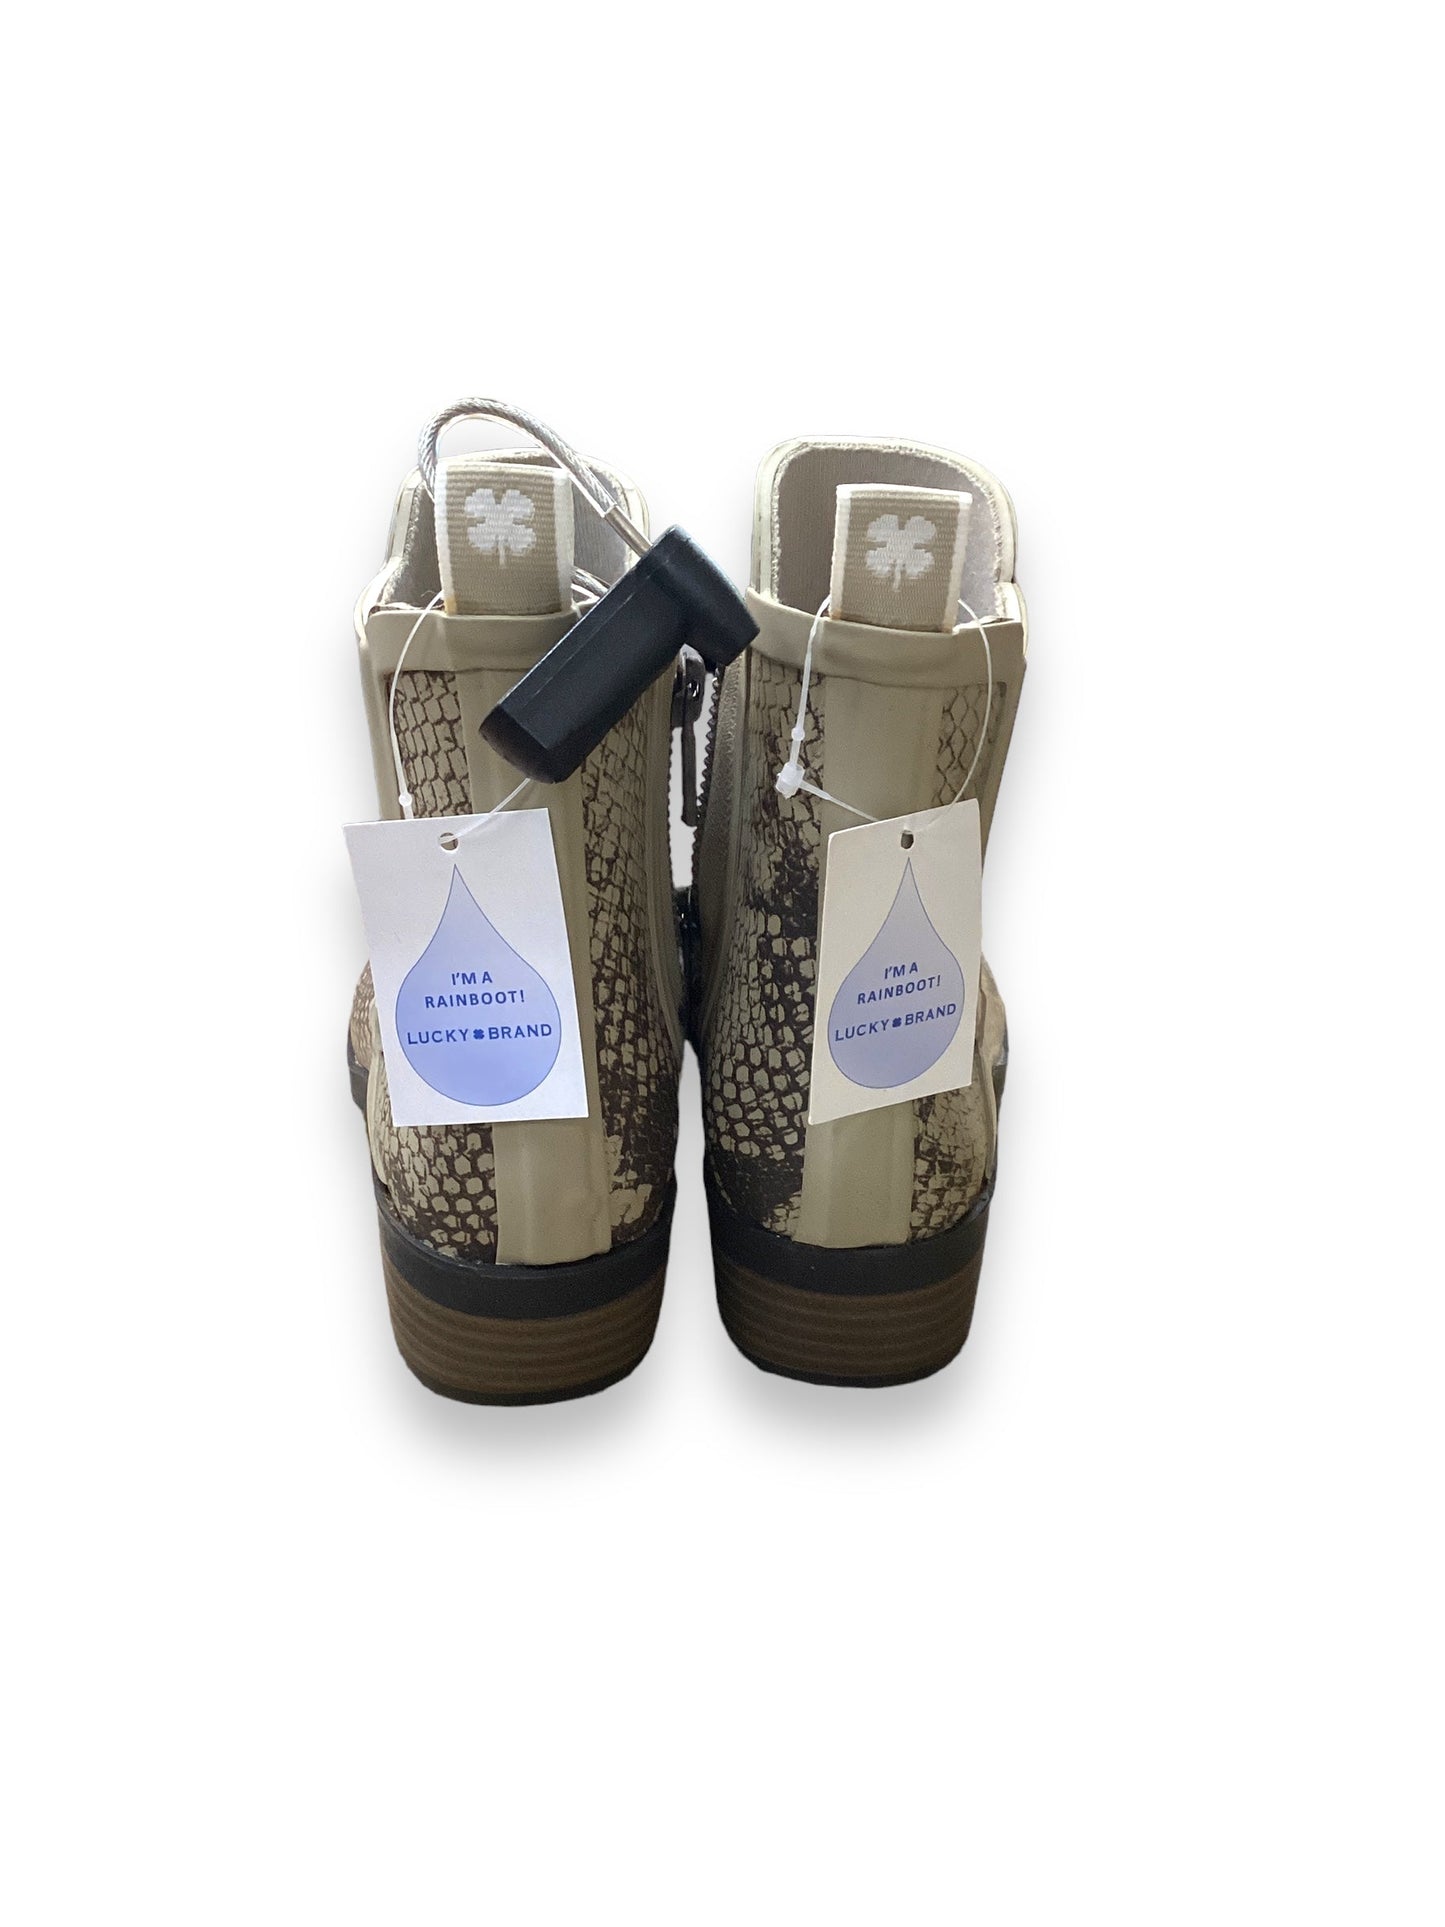 Snakeskin Print Boots Rain Lucky Brand, Size 6